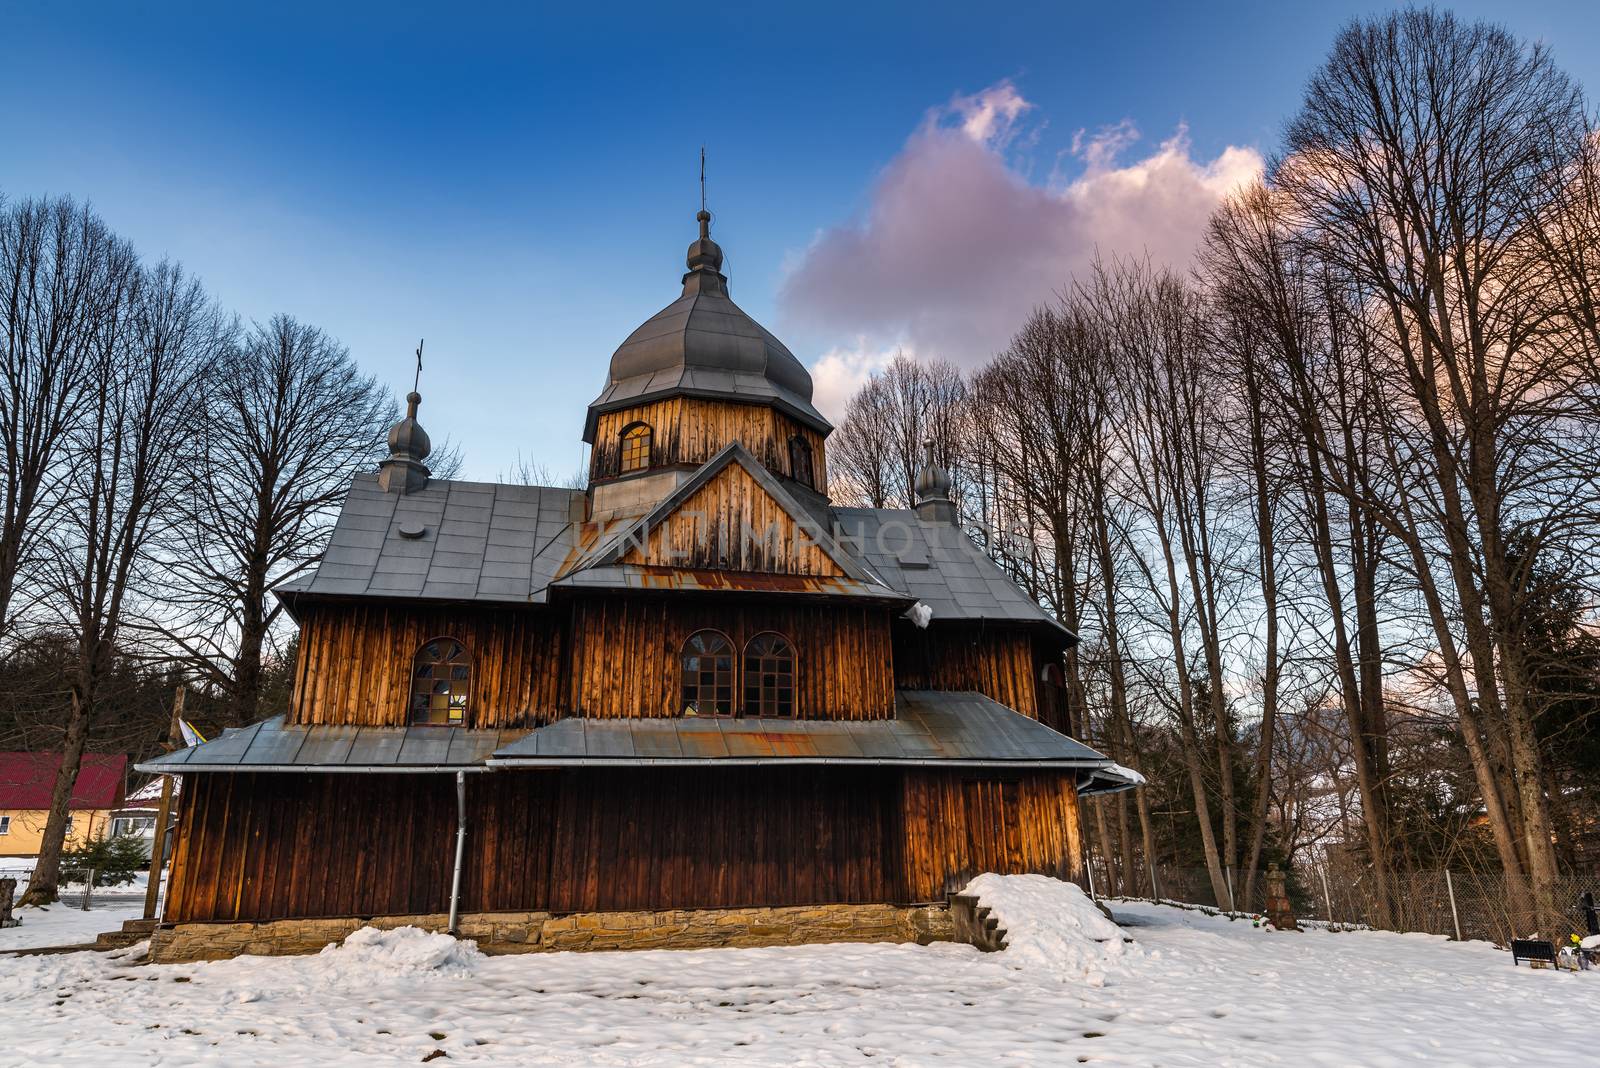 Exterior of St. Nicholas Orthodox Church in Chmiel.  Bieszczady Architecture in Winter. Carpathia Region in Poland.